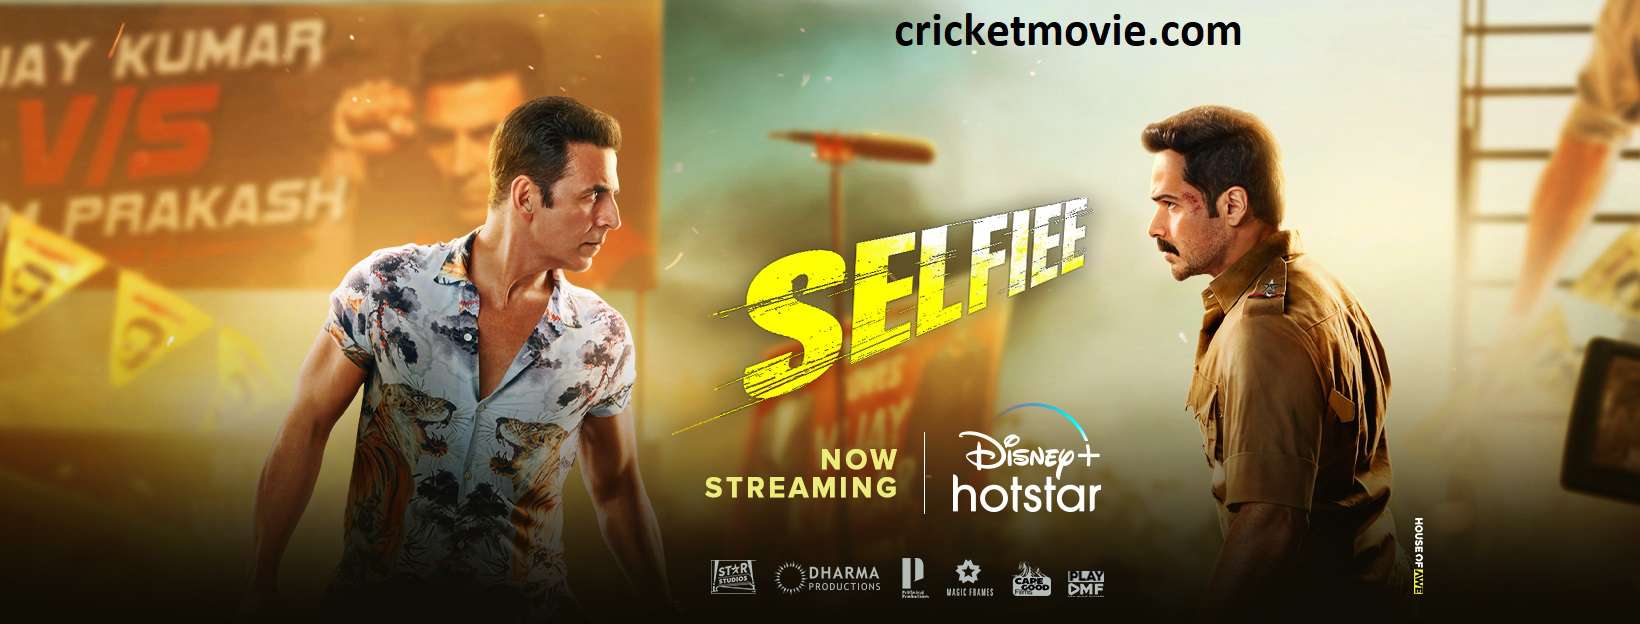 Selfiee On Hotstar-cricketmovie.com